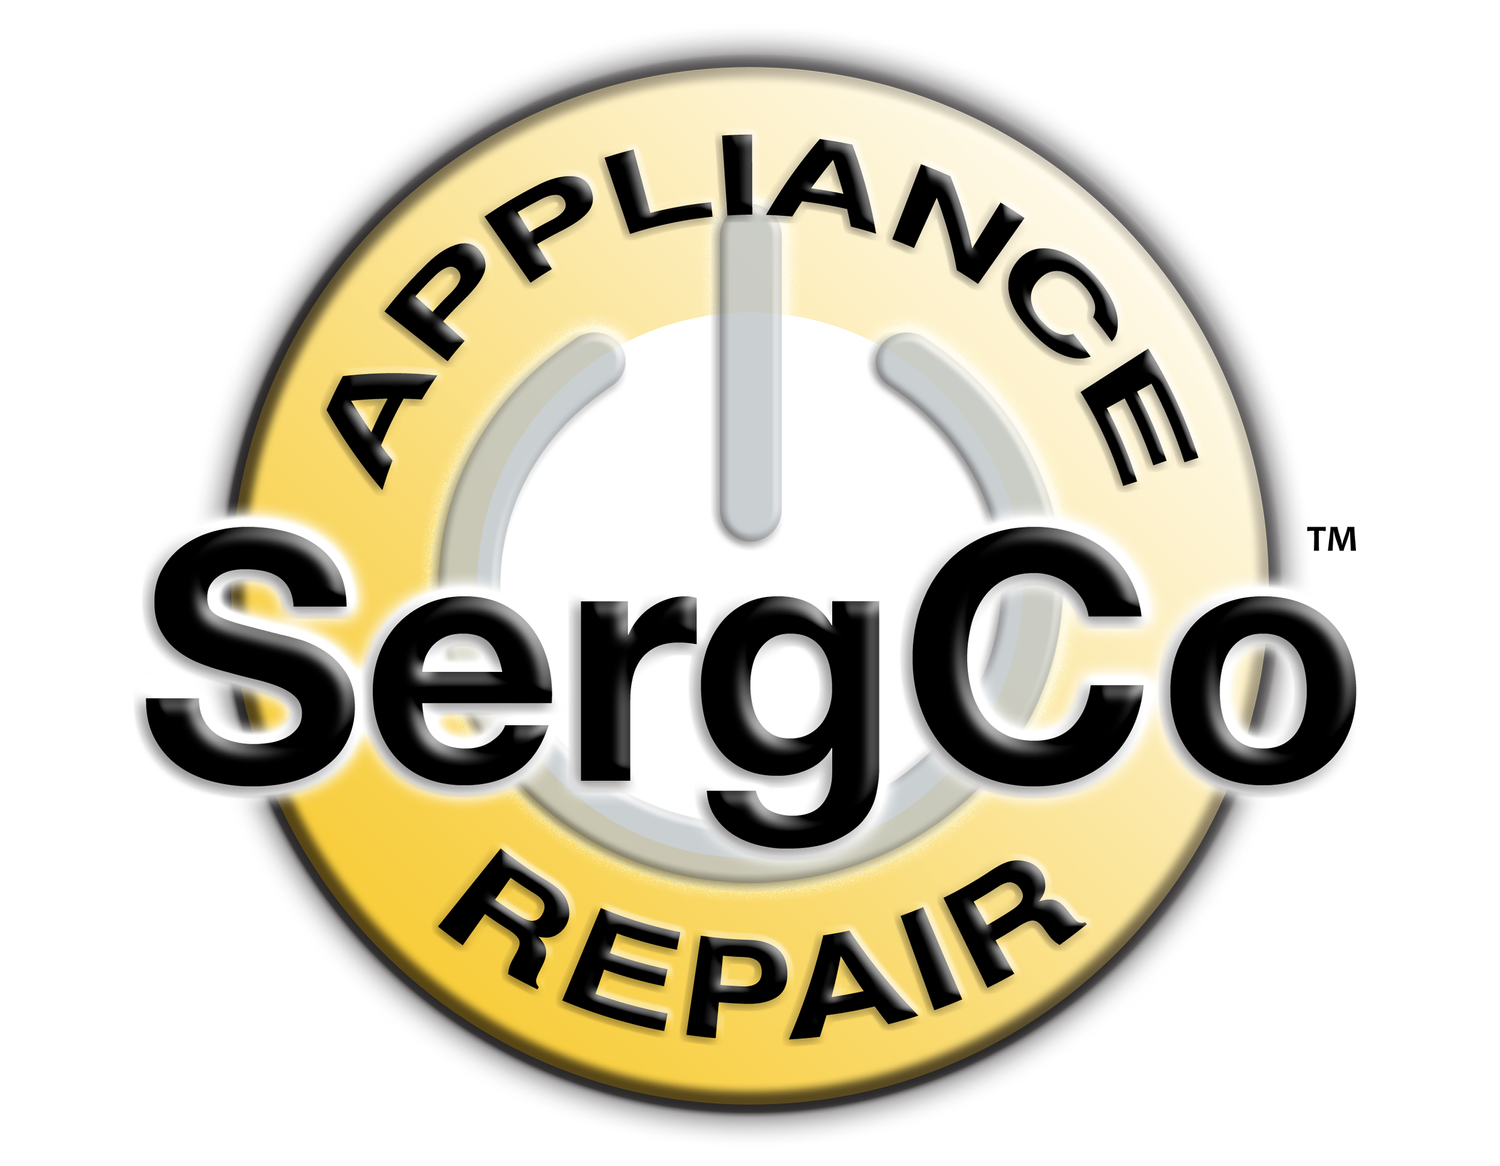 SergCo Appliance Repair